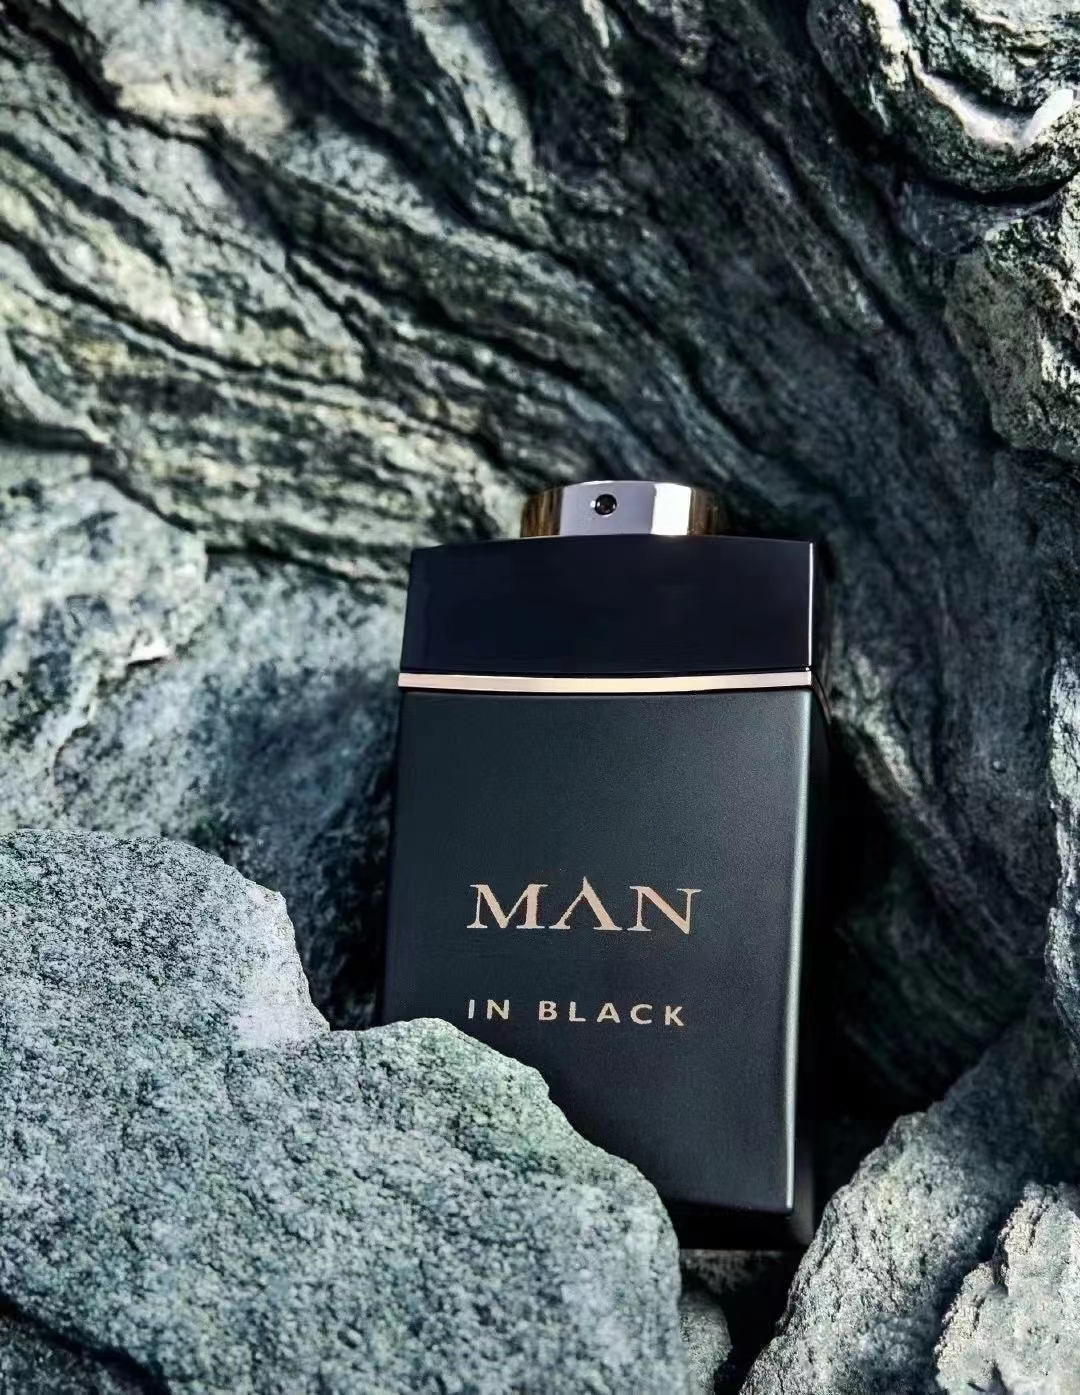 Fraiseure d'air Cologne Man Perfume Afrot Rascave Gentry Serials in Black Eau de Parfum 3,4 oz 100 ml Spray Bonne odeur Longue